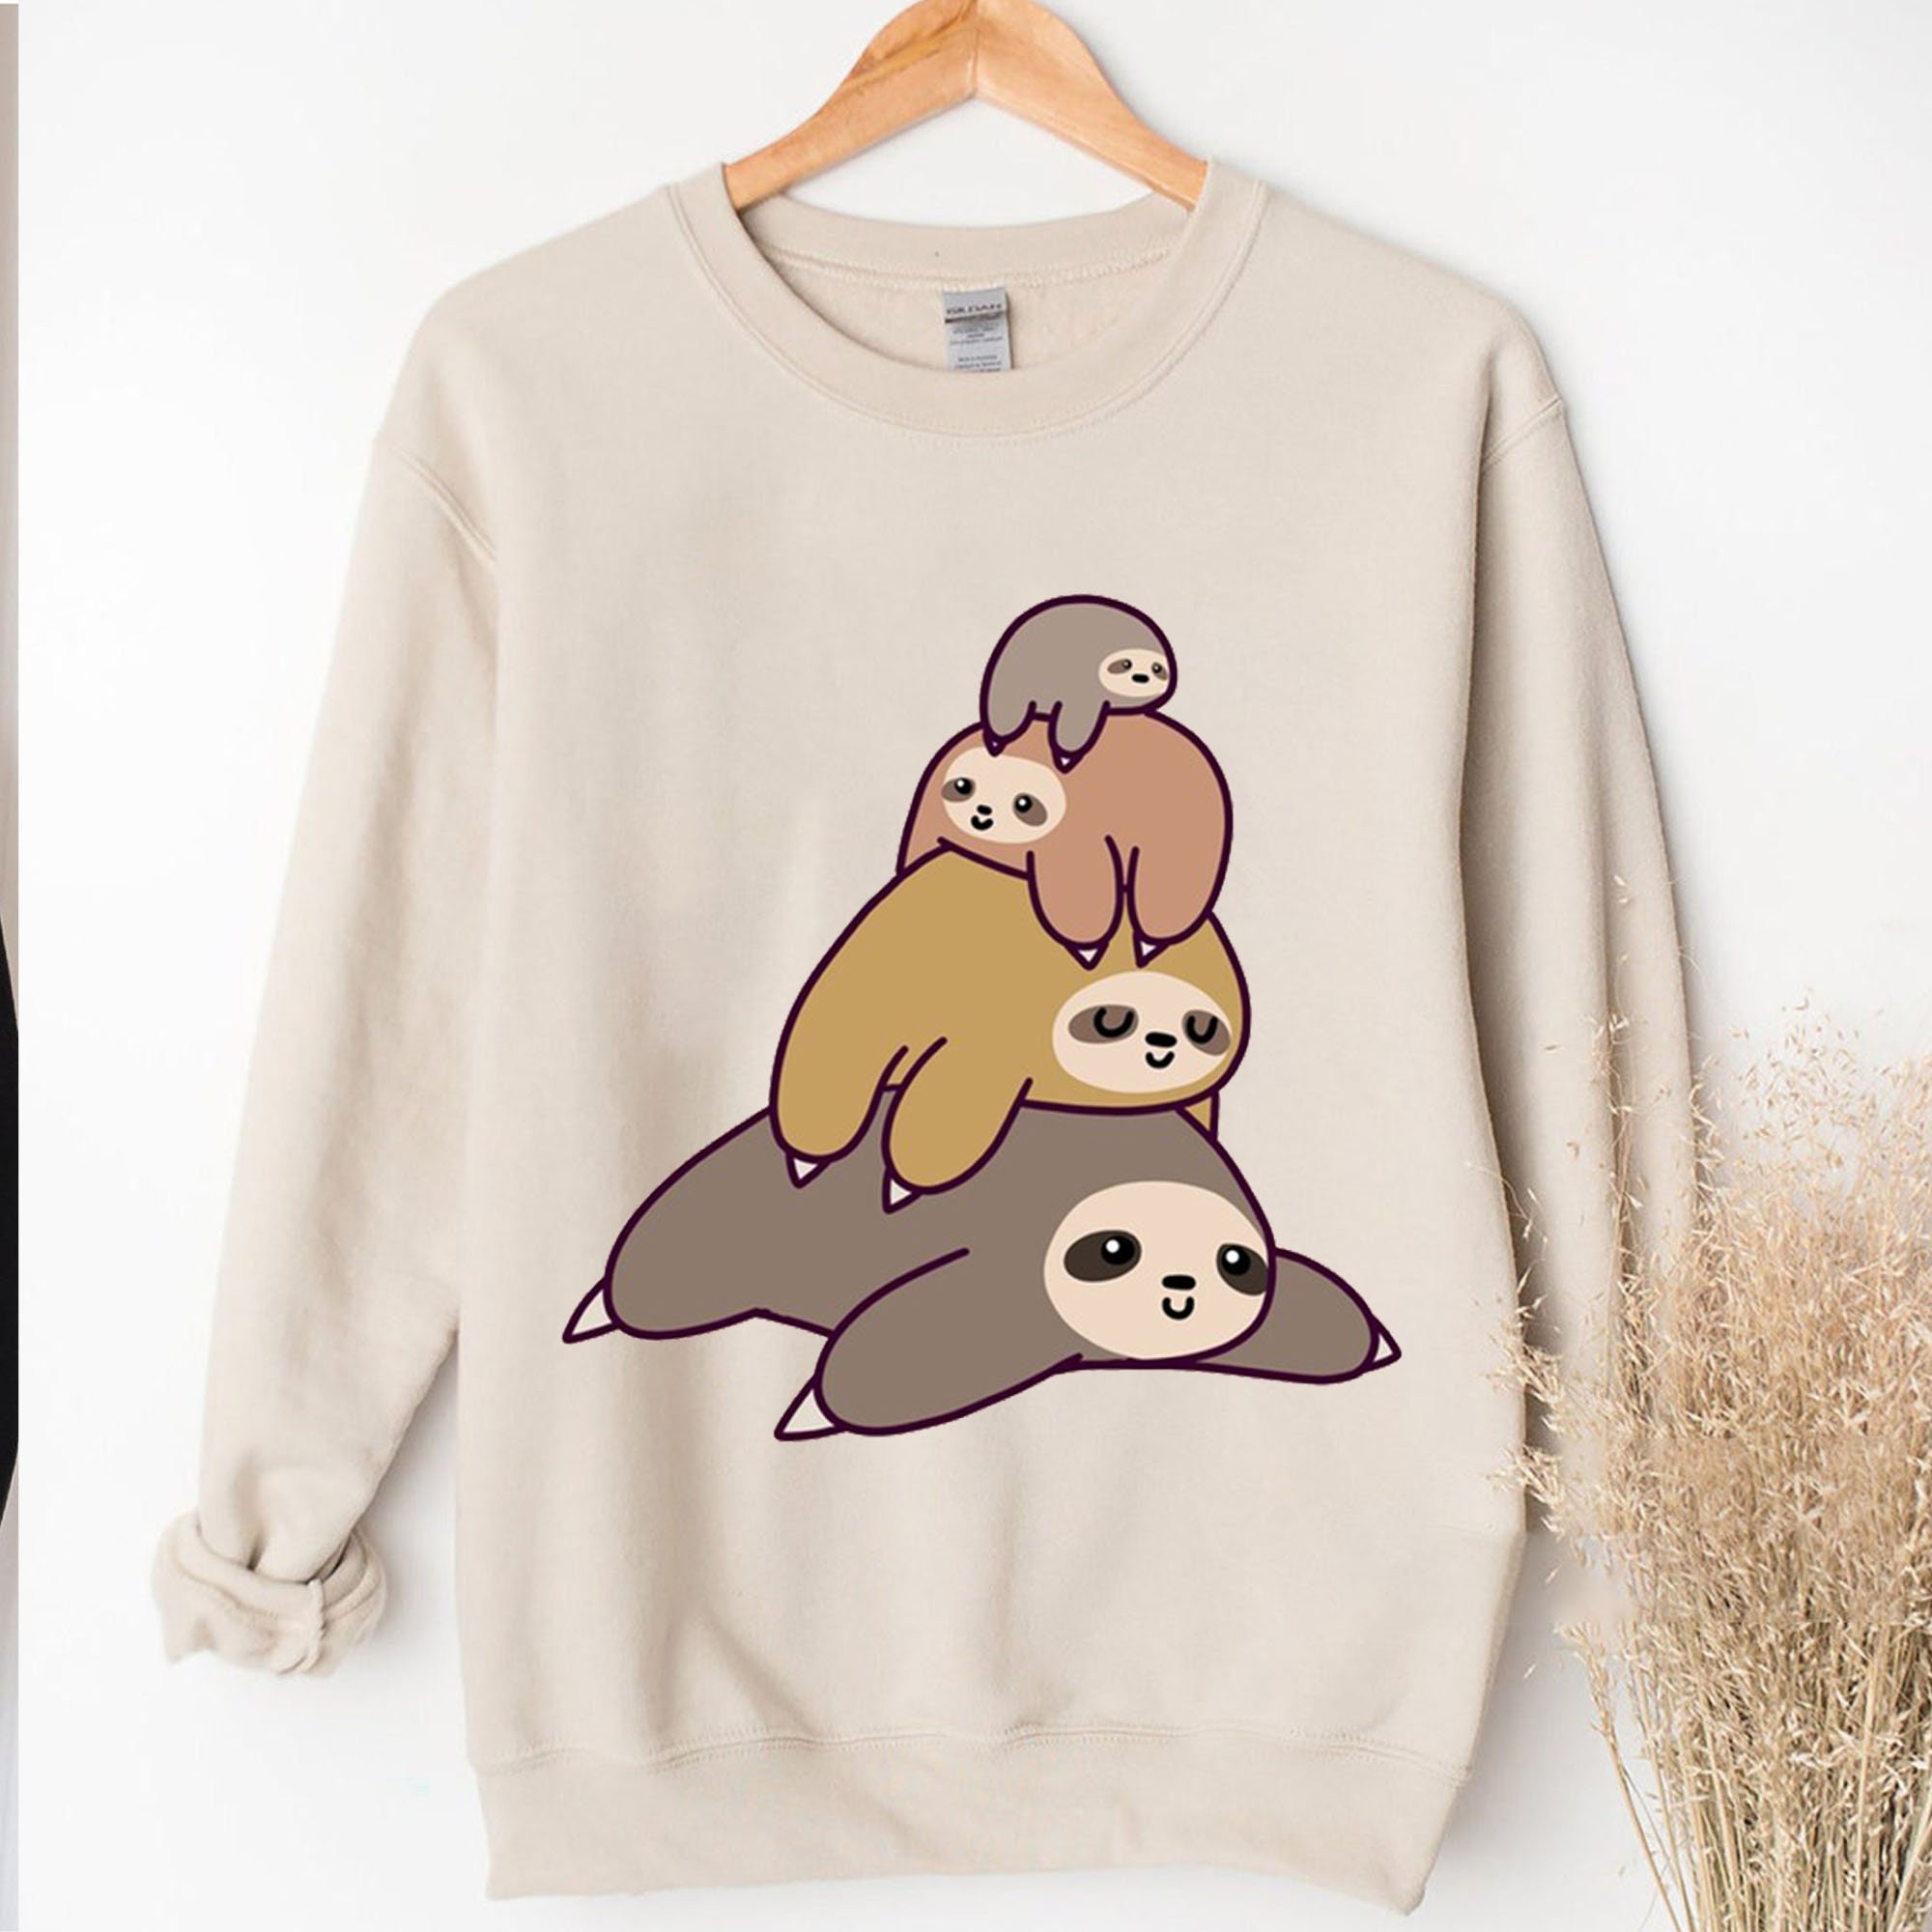 Discover Funny Sloth Shirt, Animal Lover Shirt, Sloth Lover Shirt, Sloth Sweatshirt